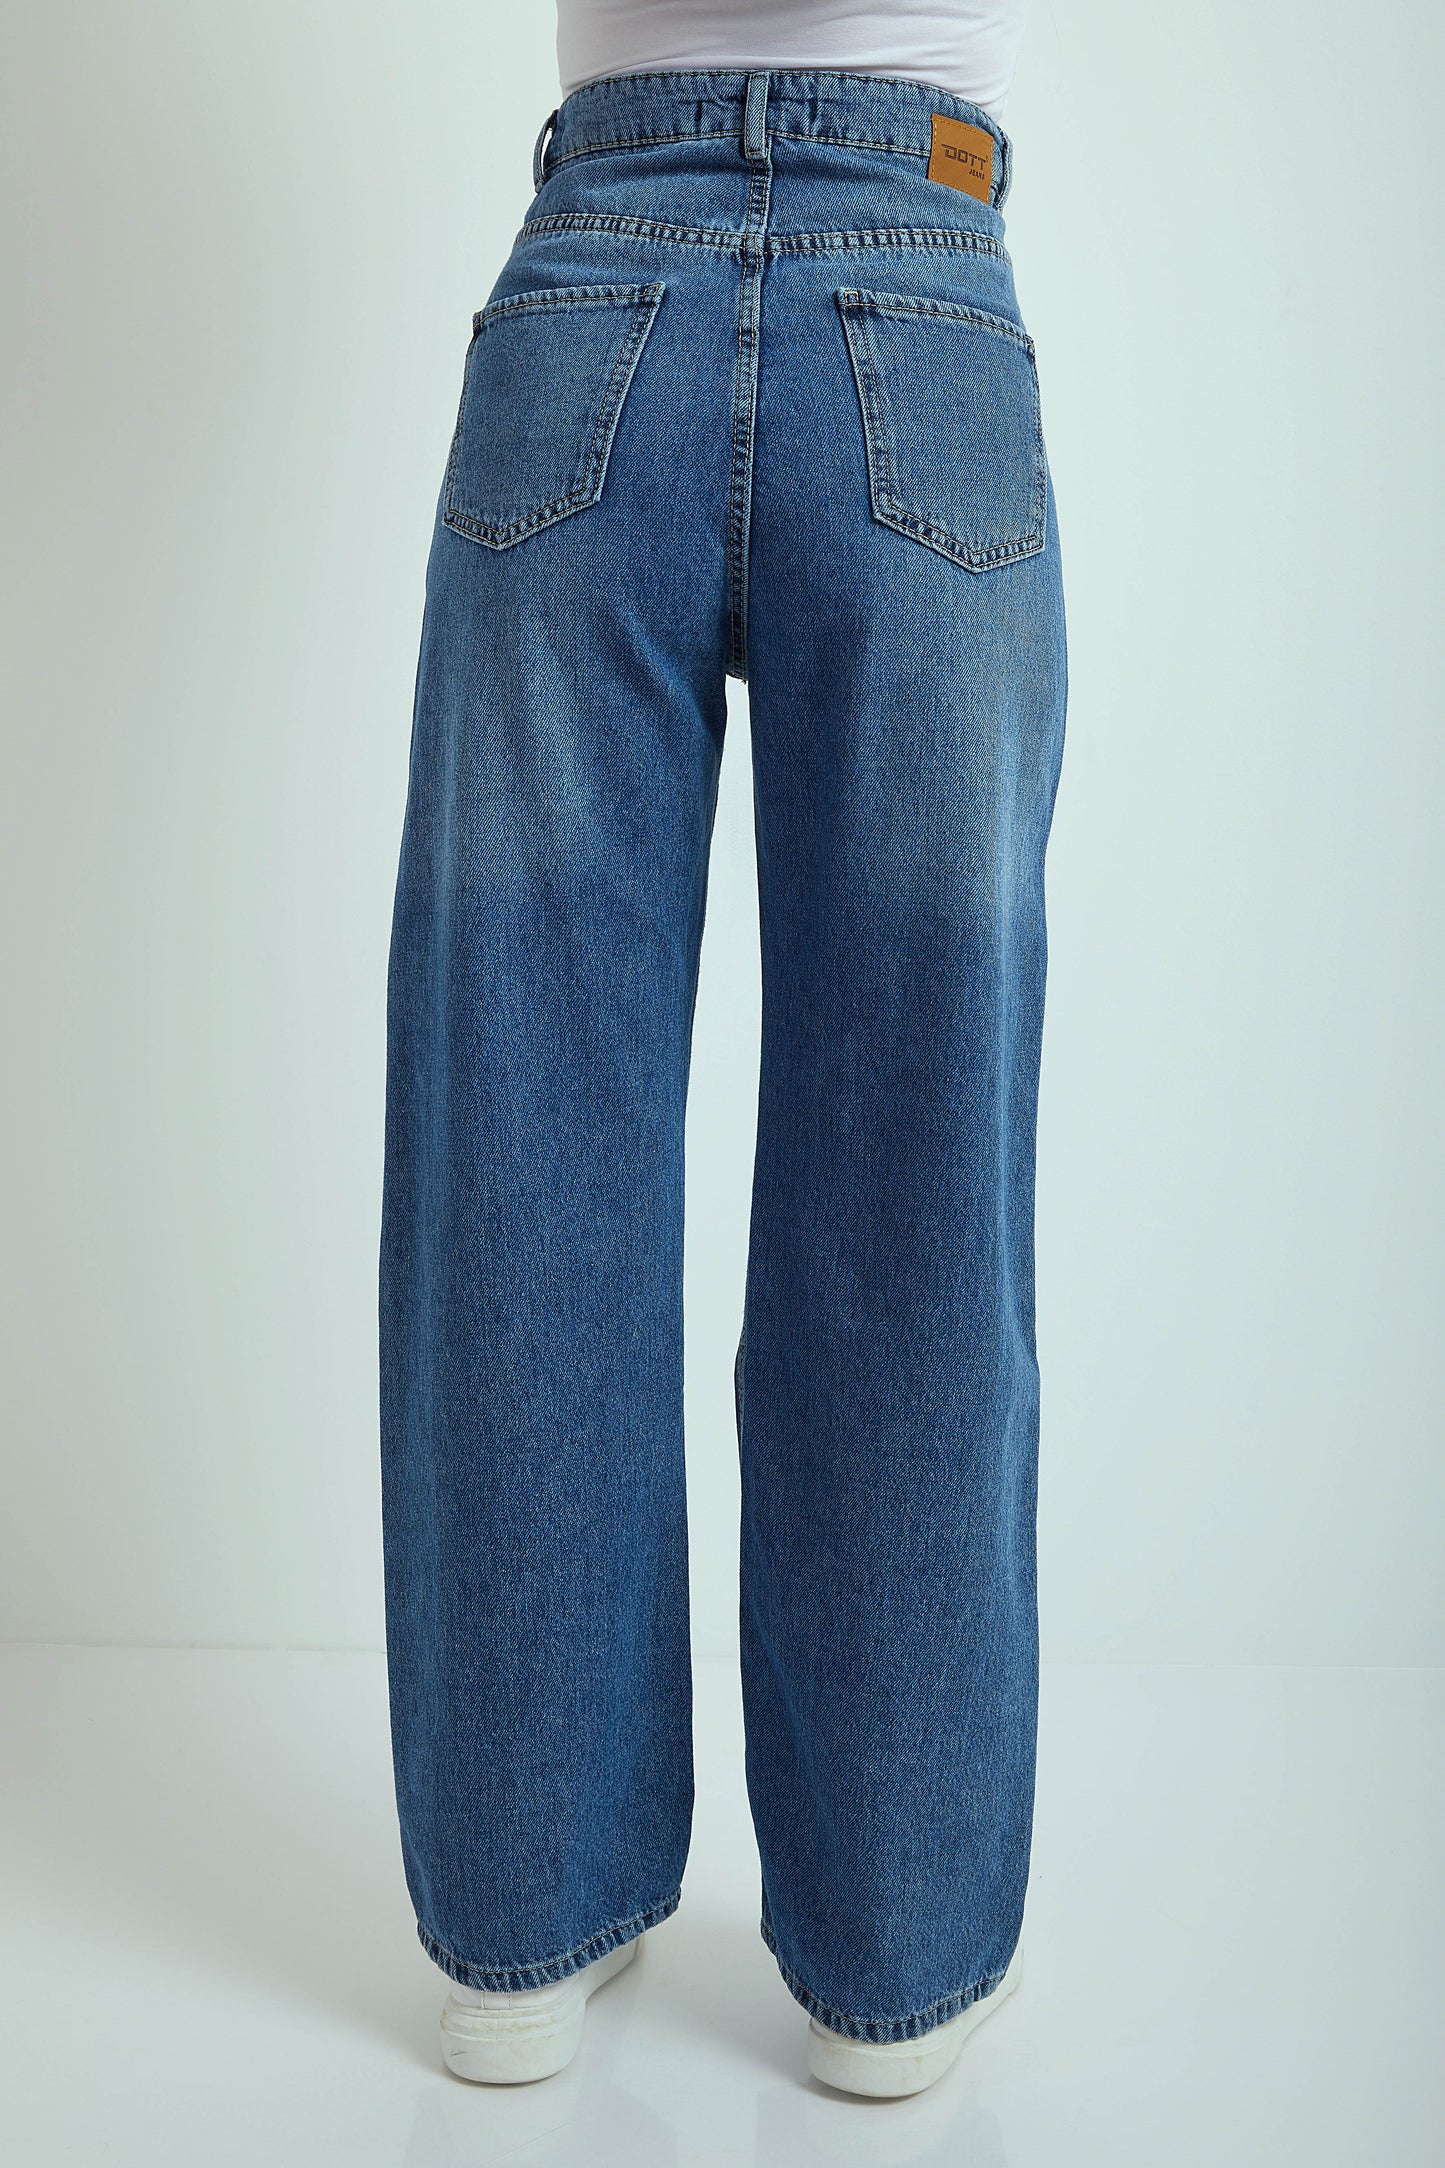 Jeans - Double Waist ( Wide Leg )